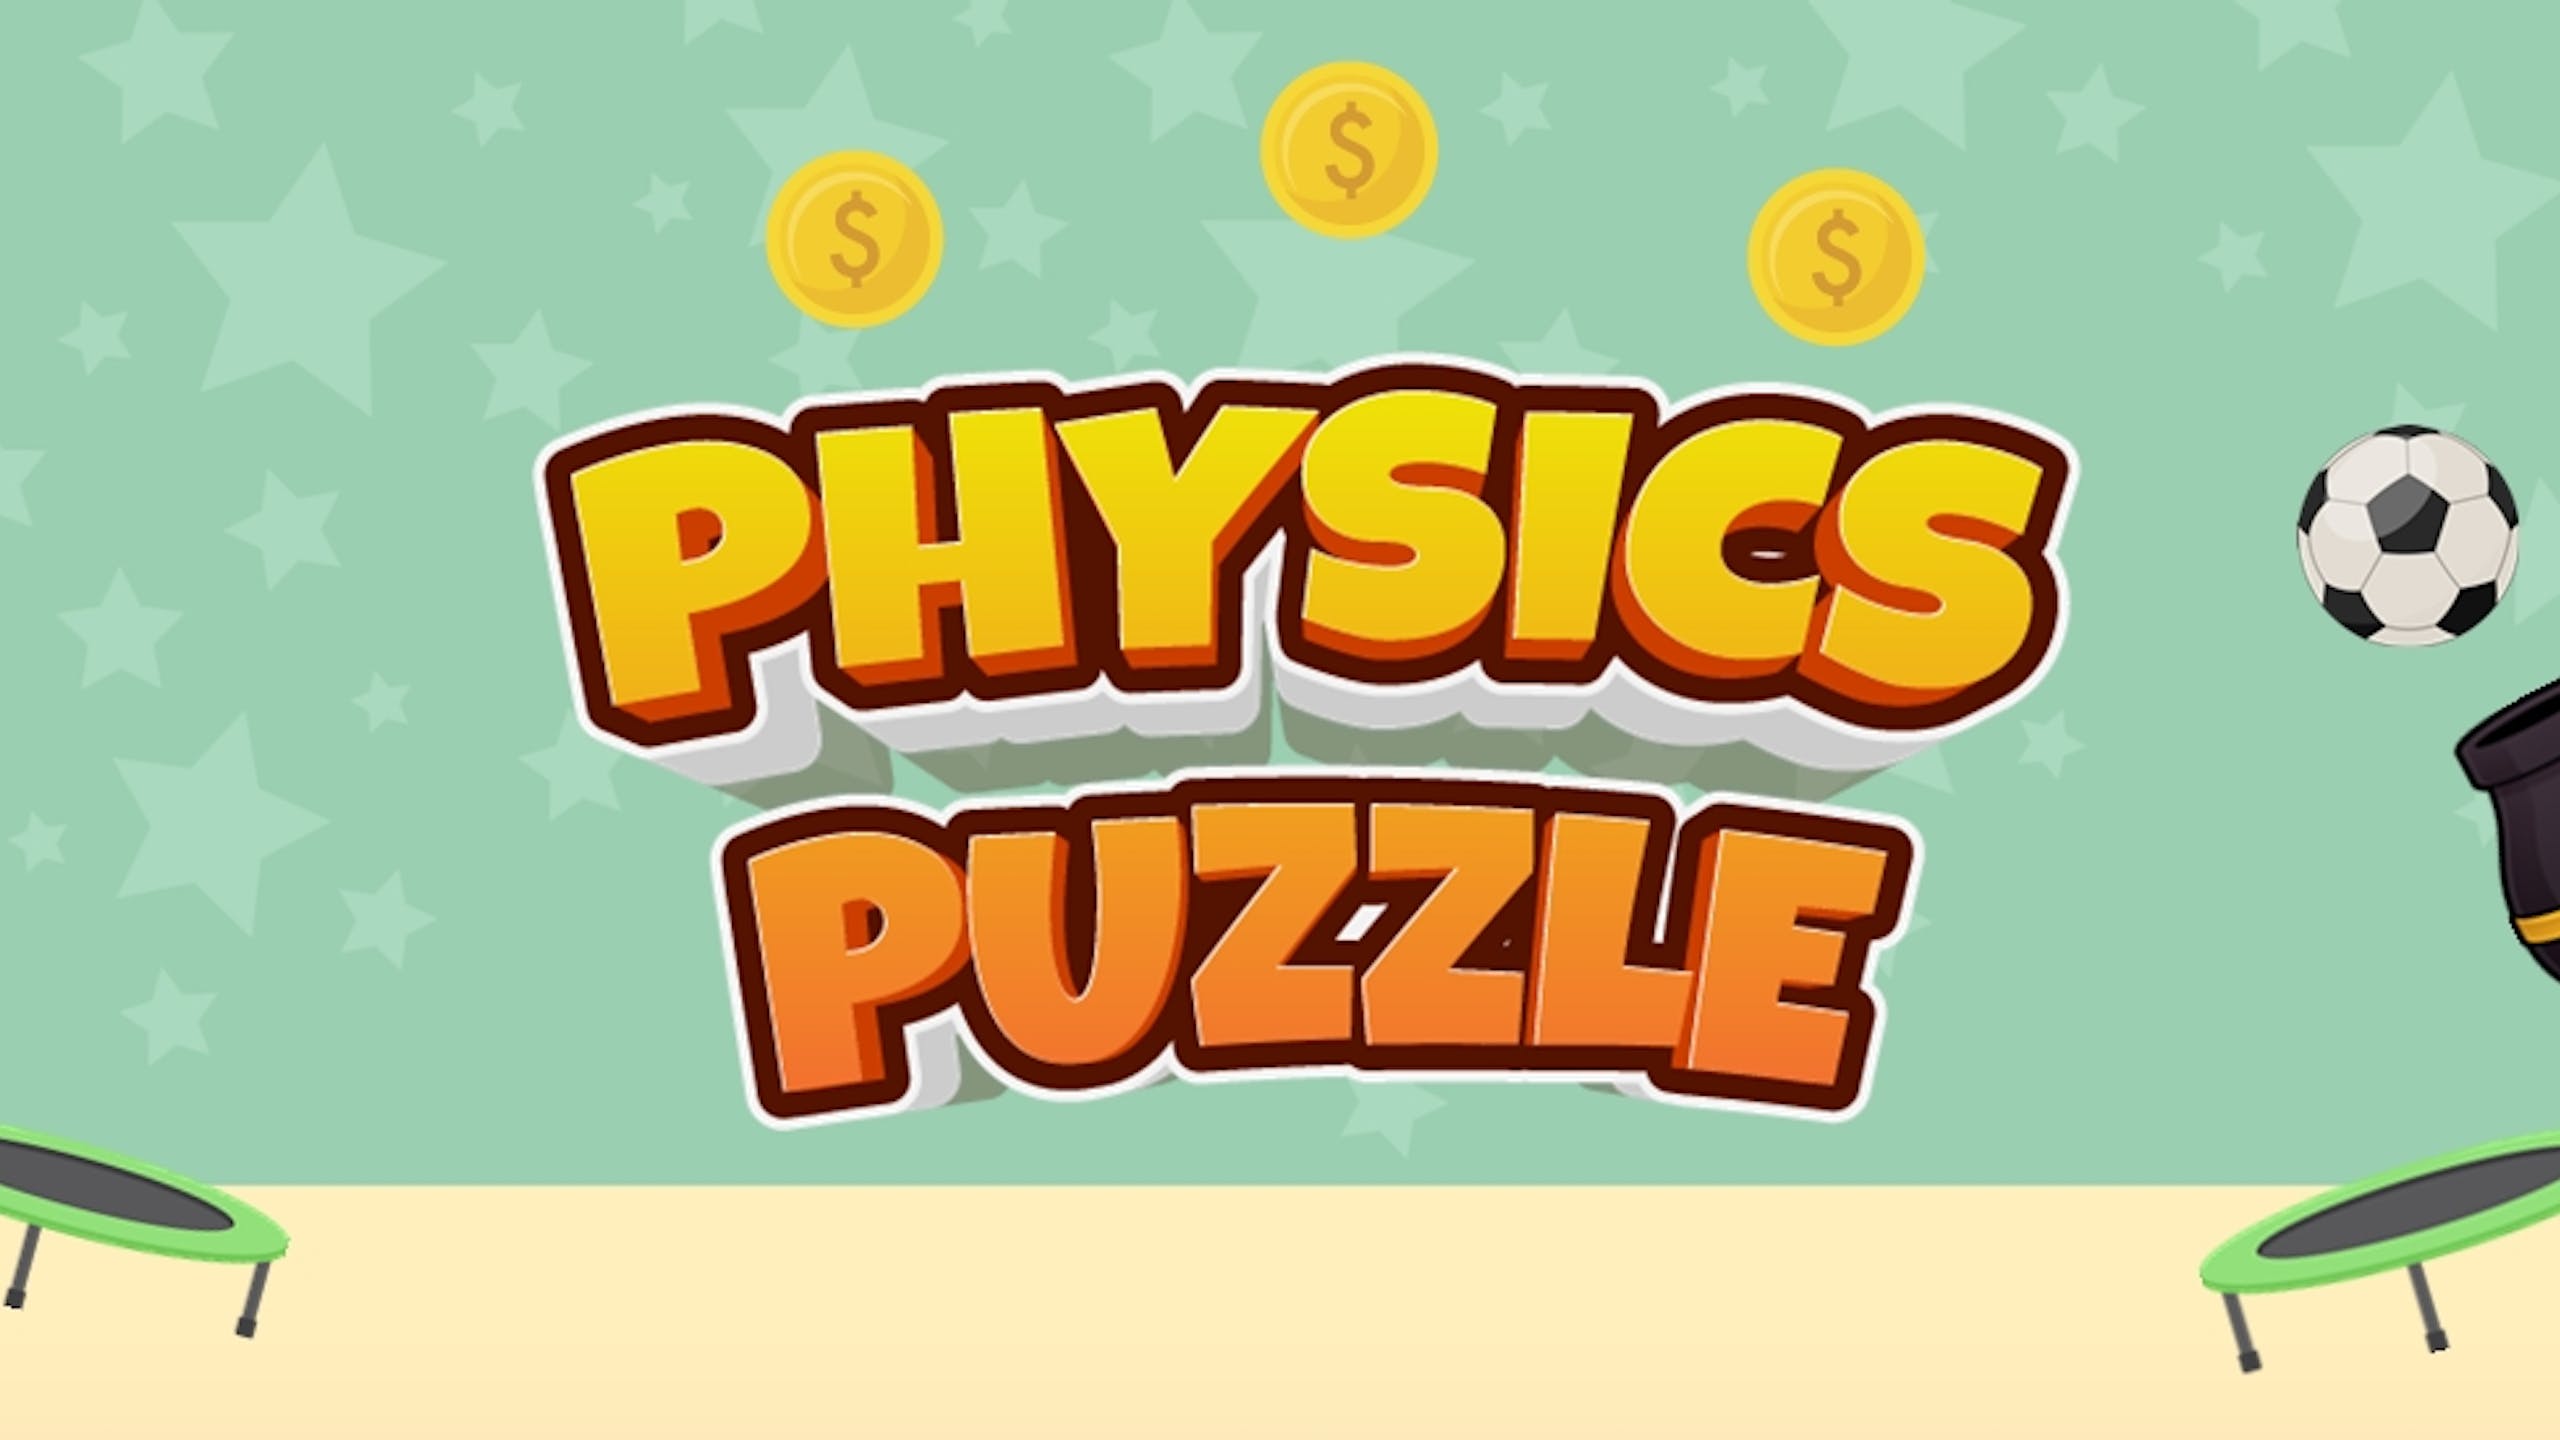 Physics Puzzle